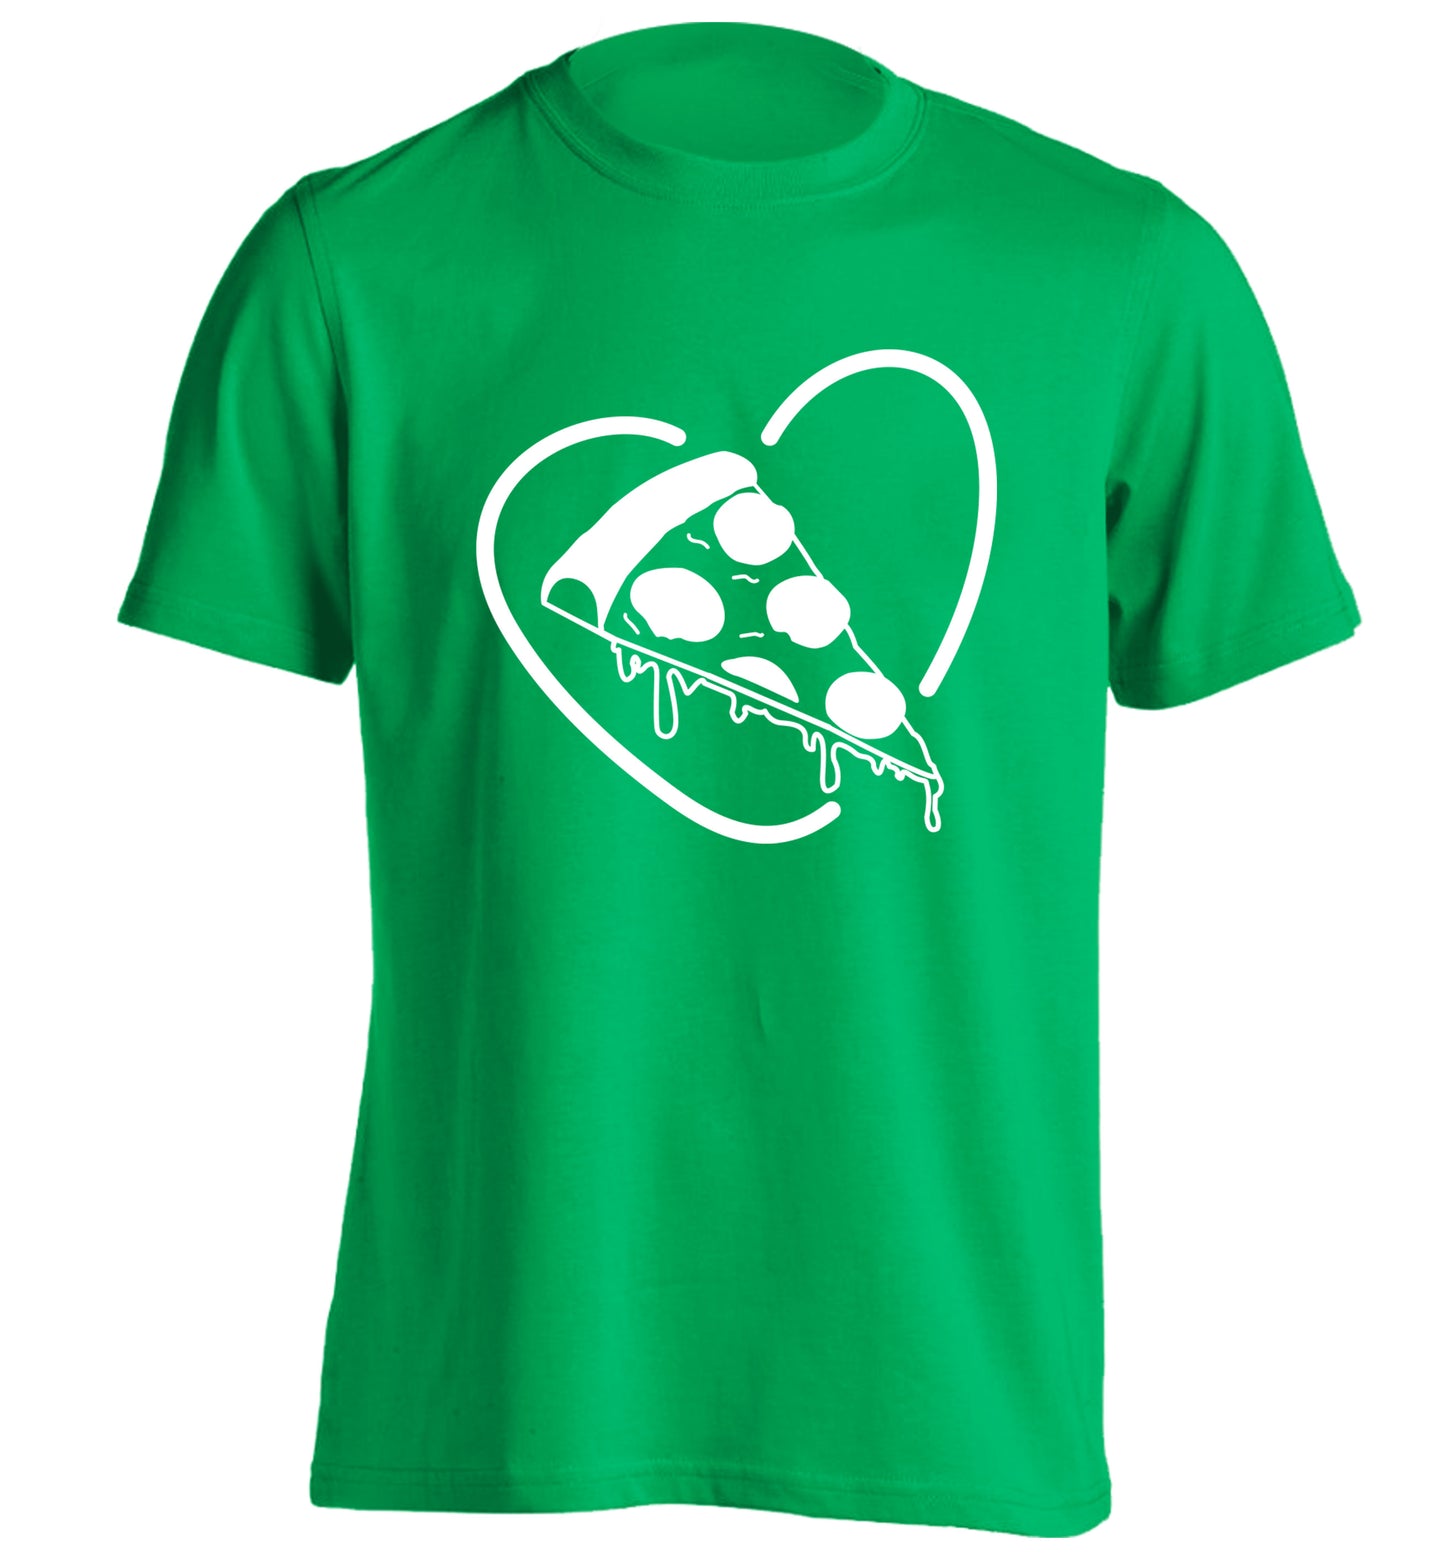 Pizza heart adults unisex green Tshirt 2XL